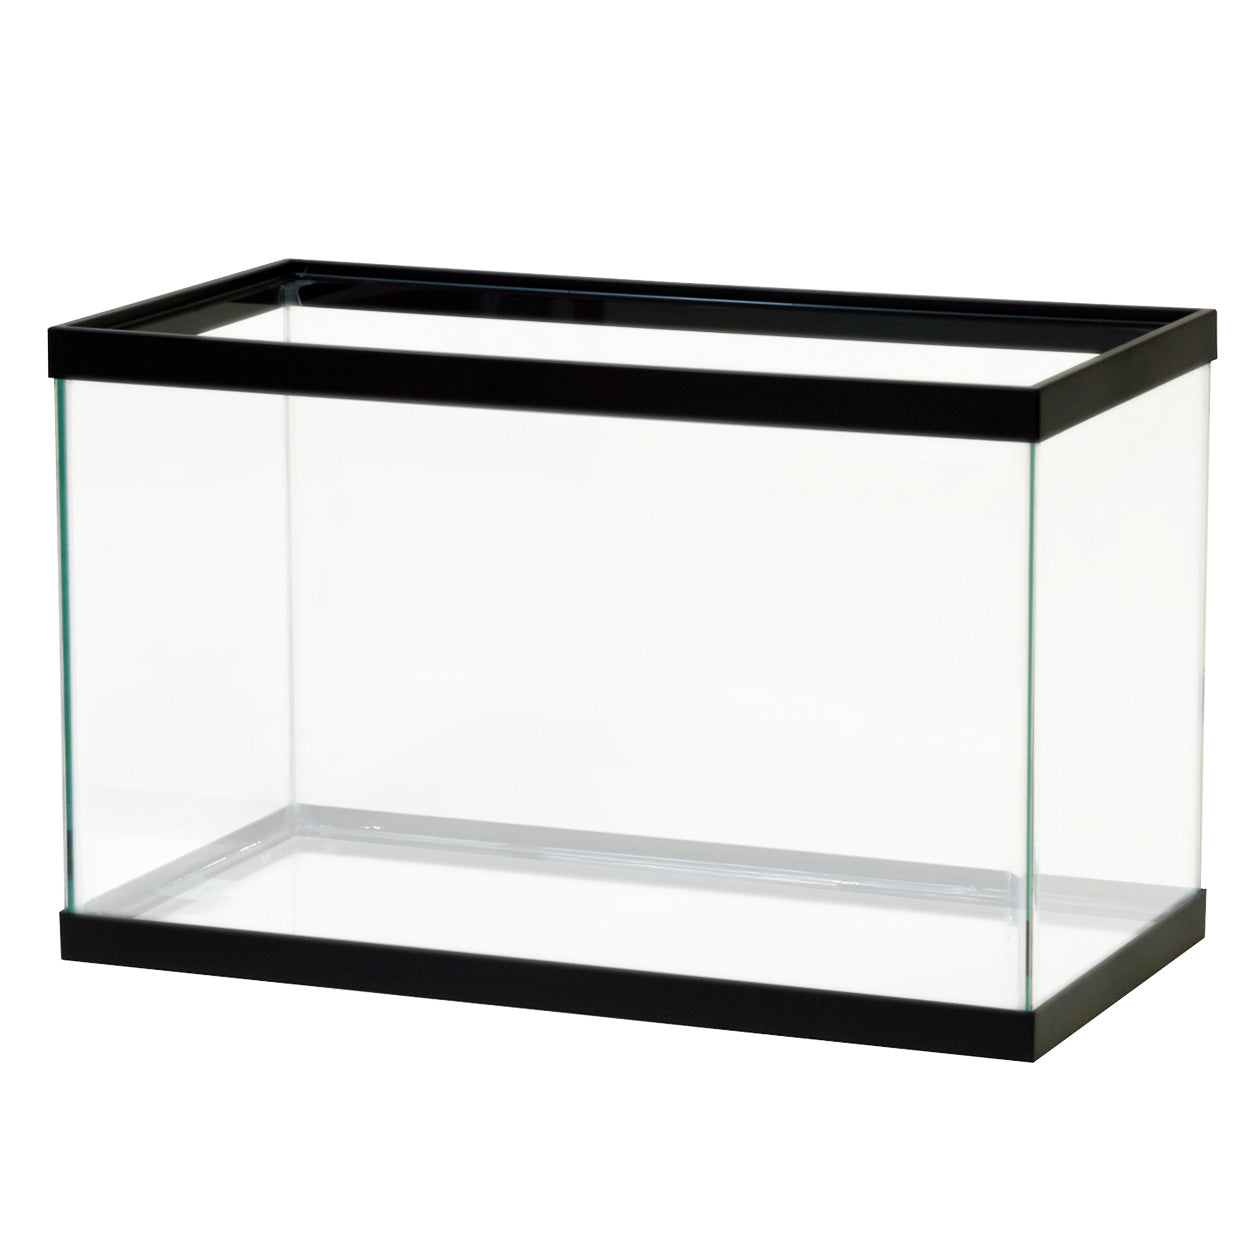 Aqueon Standard Aquarium - Black Frame - 10 gallon- Clear Silicone – Shrimp  Lover & Tropical Fish